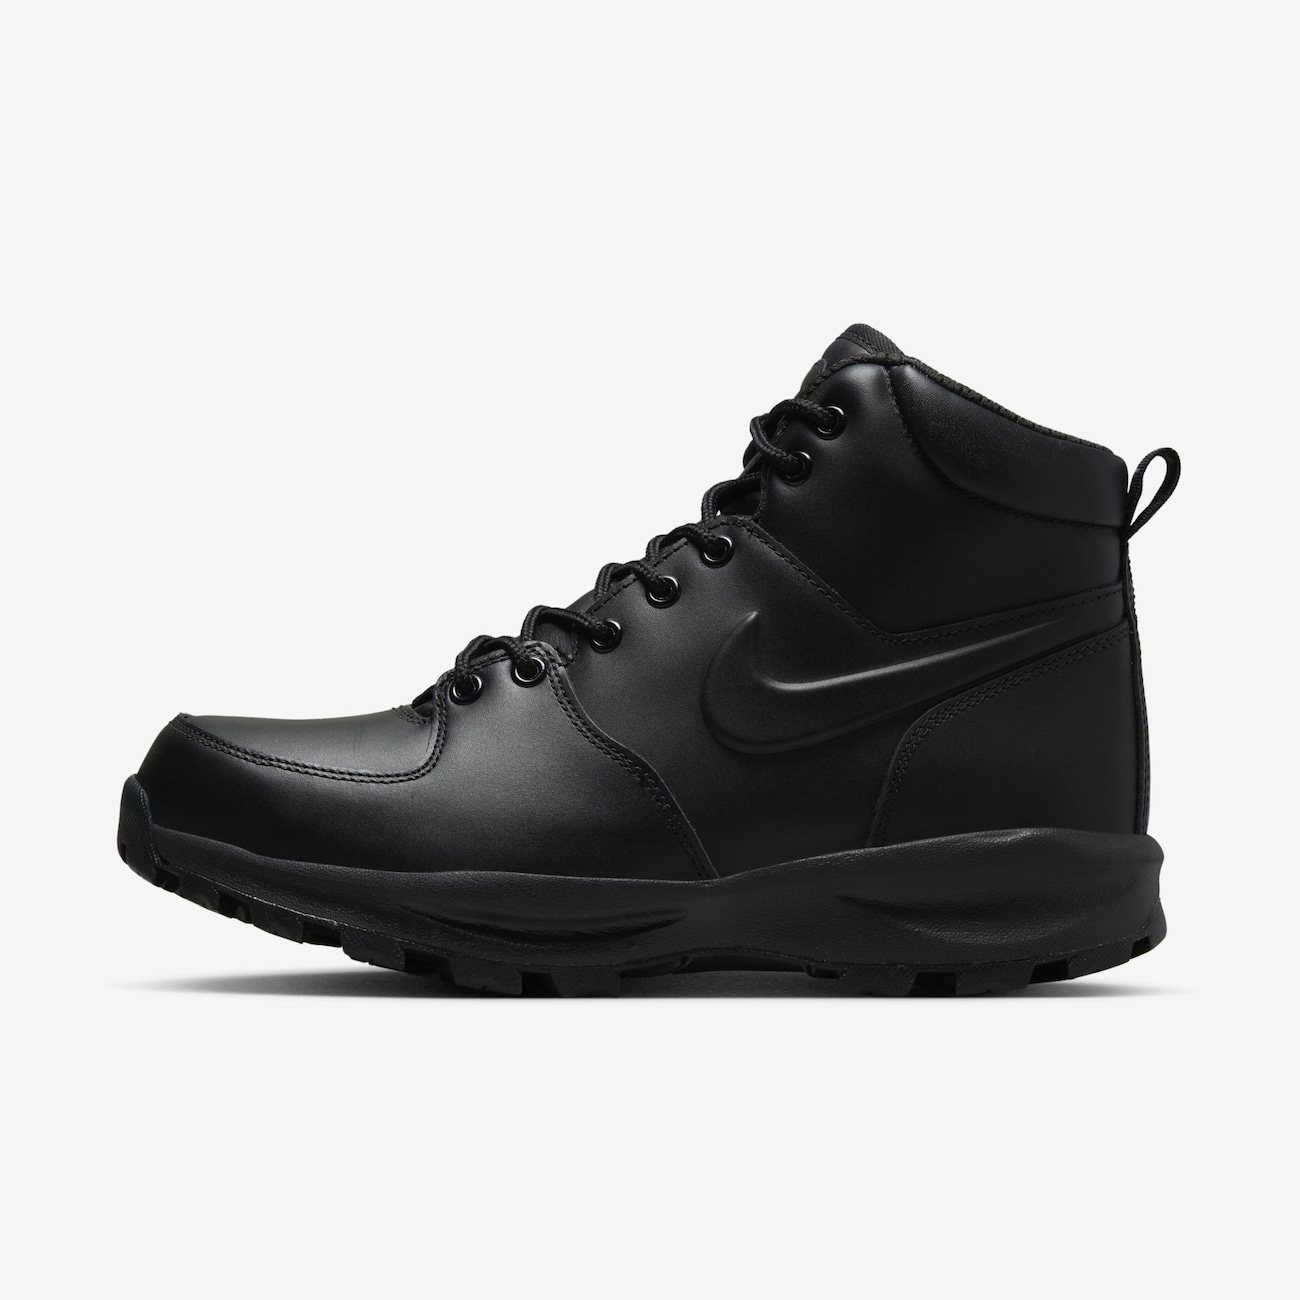 Nike Manoa Leather Herenboots - Zwart